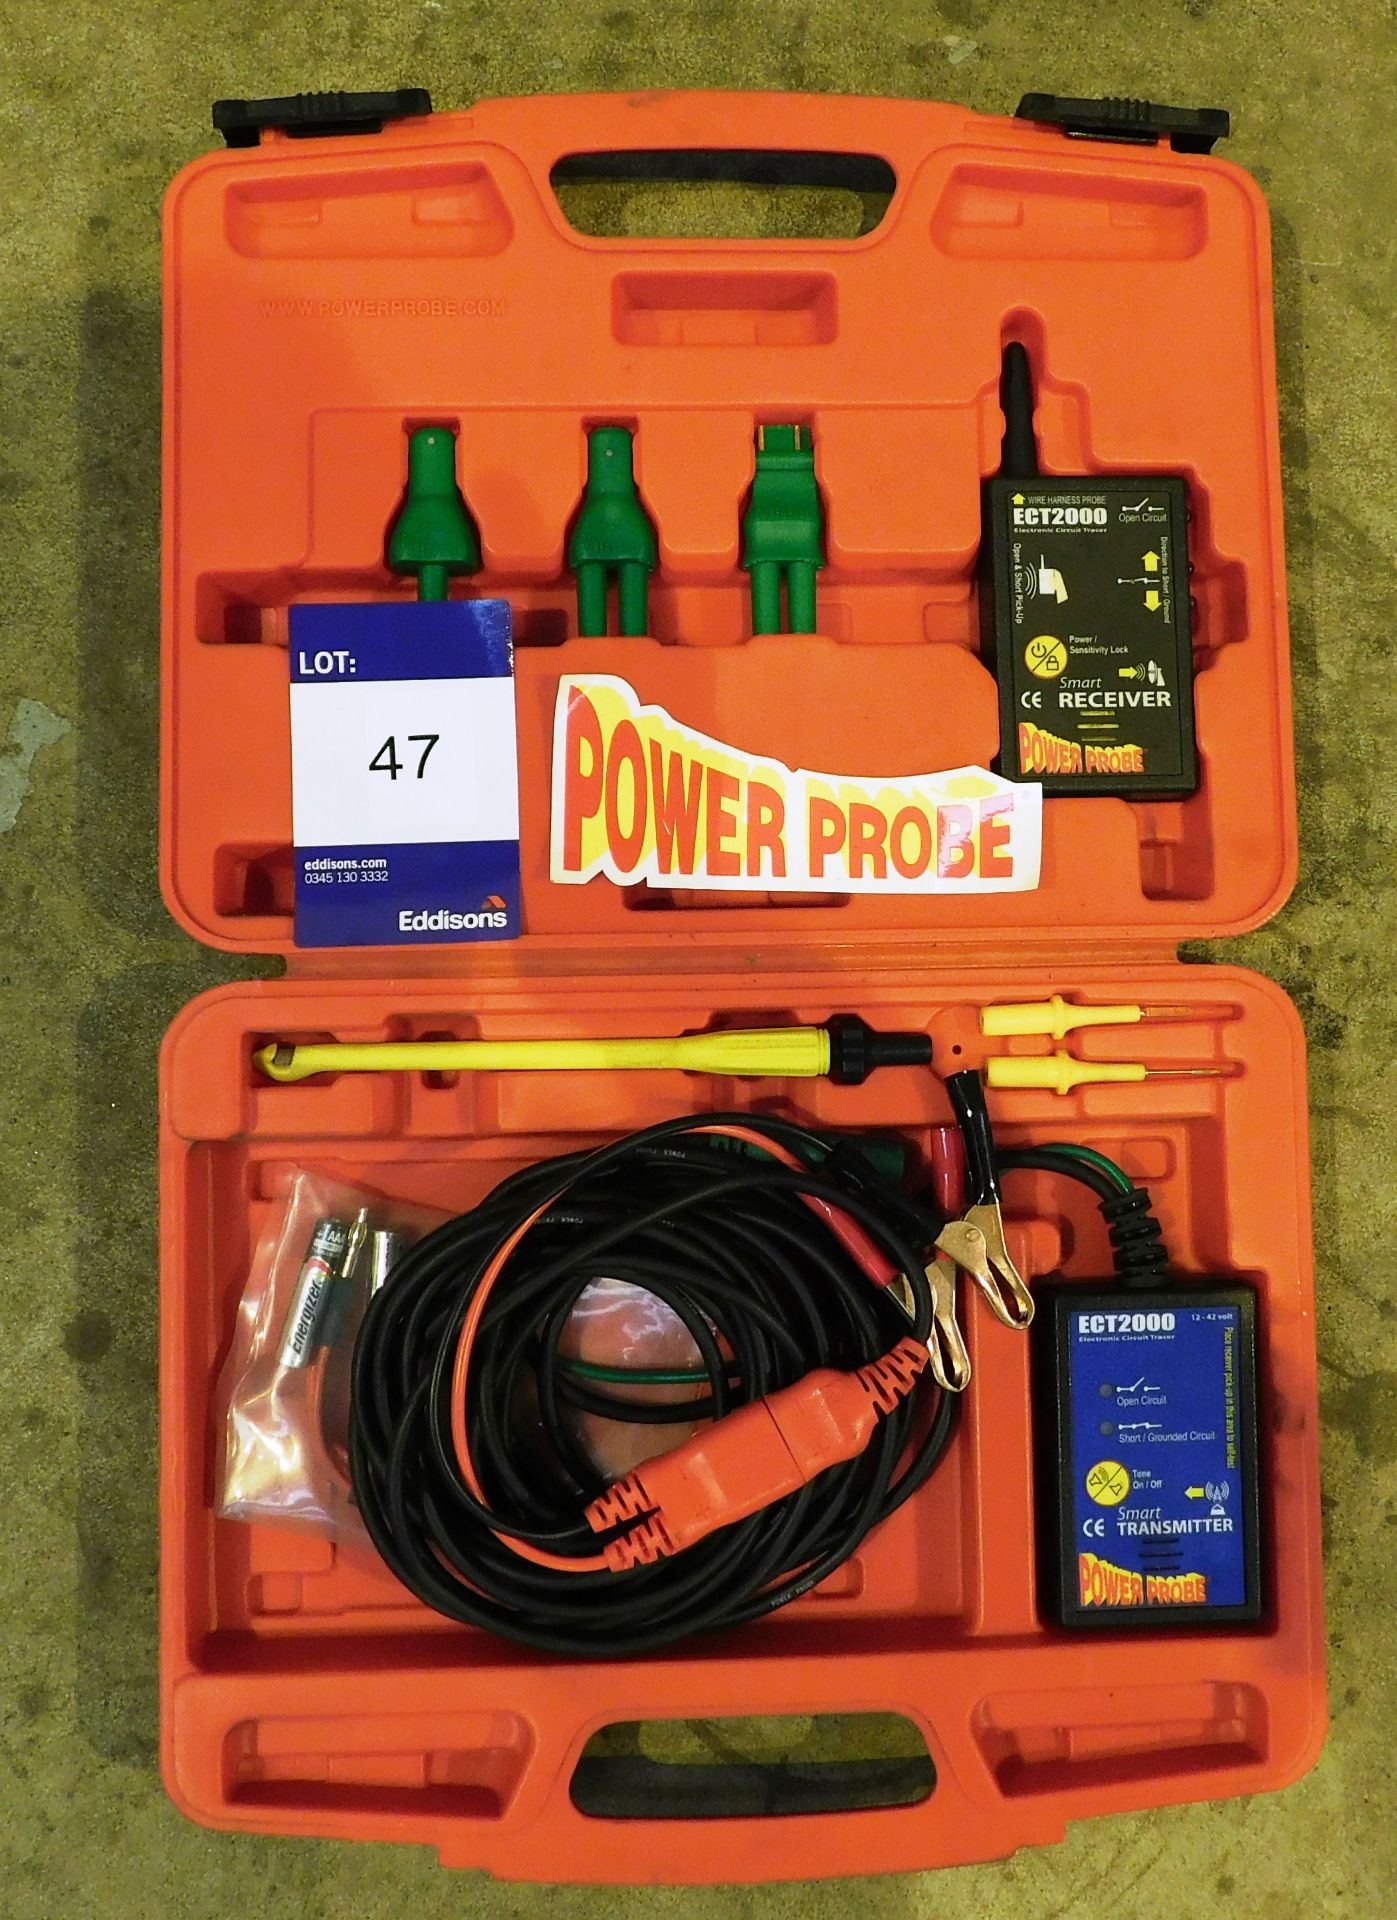 Power Probe Transmitter & Receiver